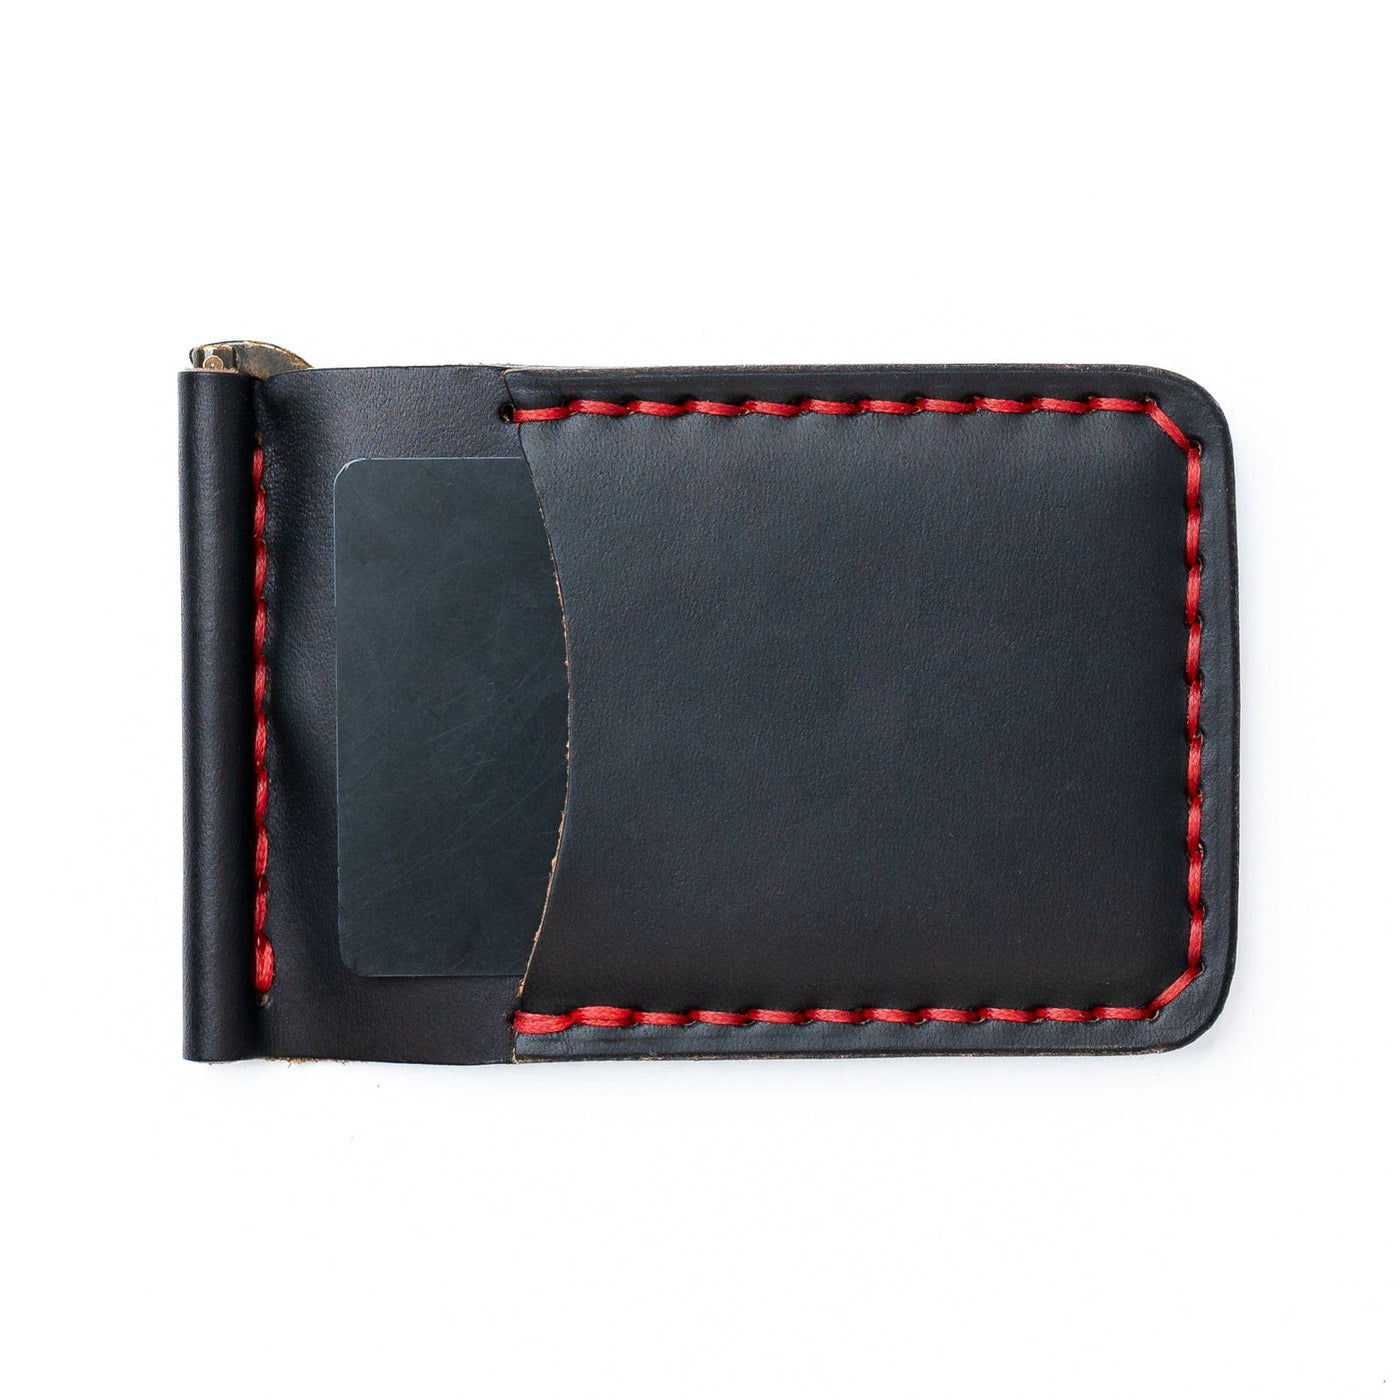 Leather Money Clip Wallet - Black Popov Leather